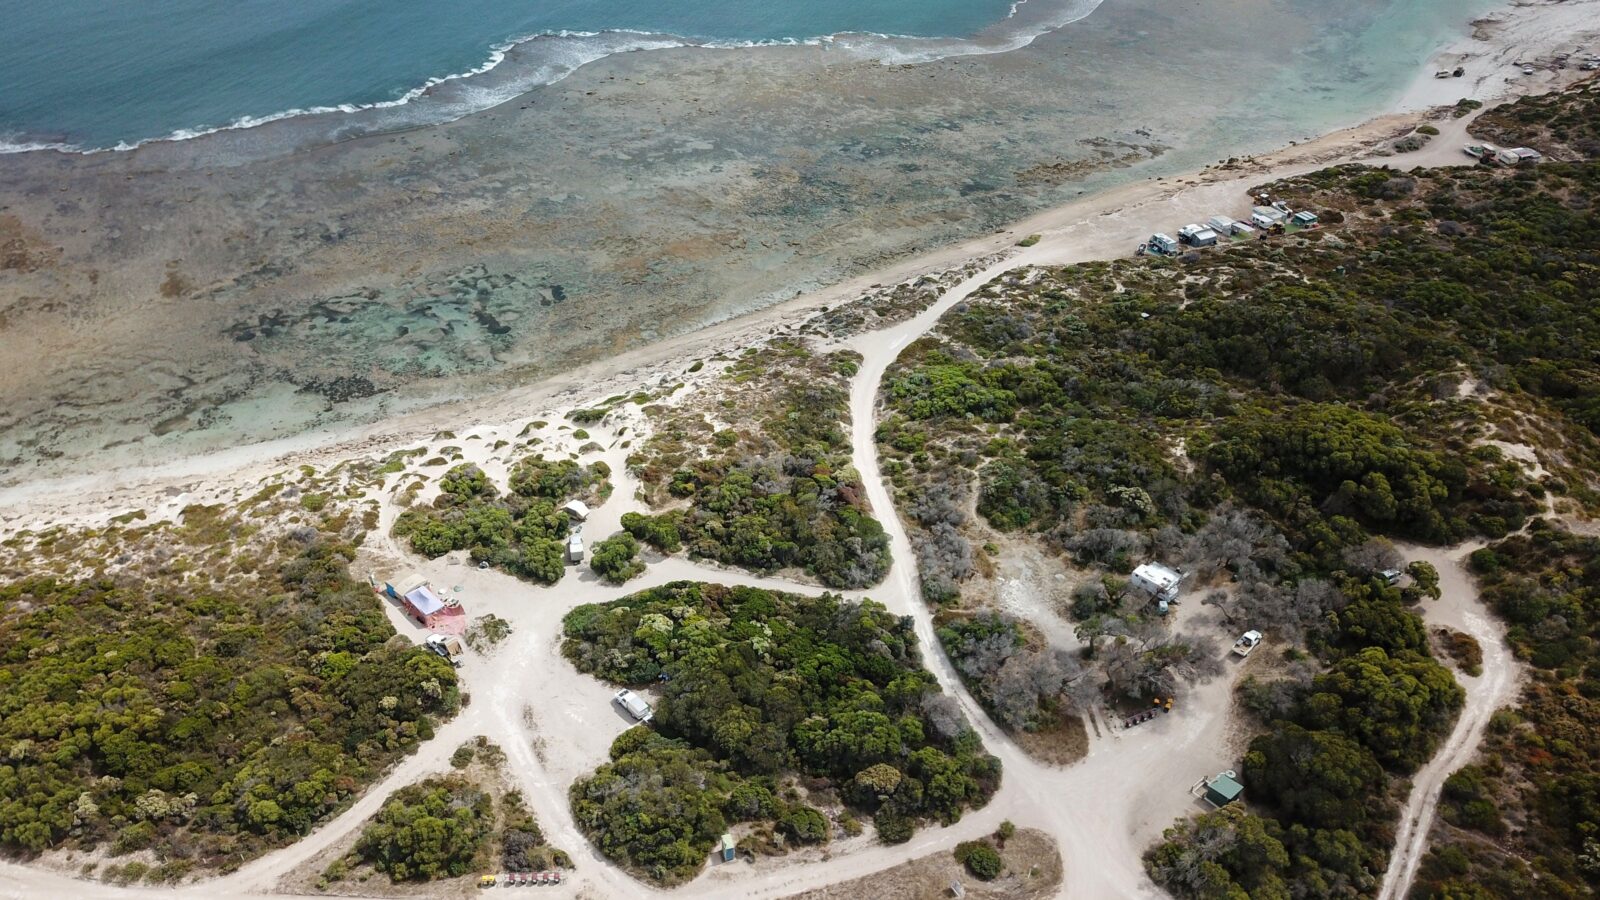 Drone view of coastal campground. Sand tracks through coastal scrub. Reef coast in background.